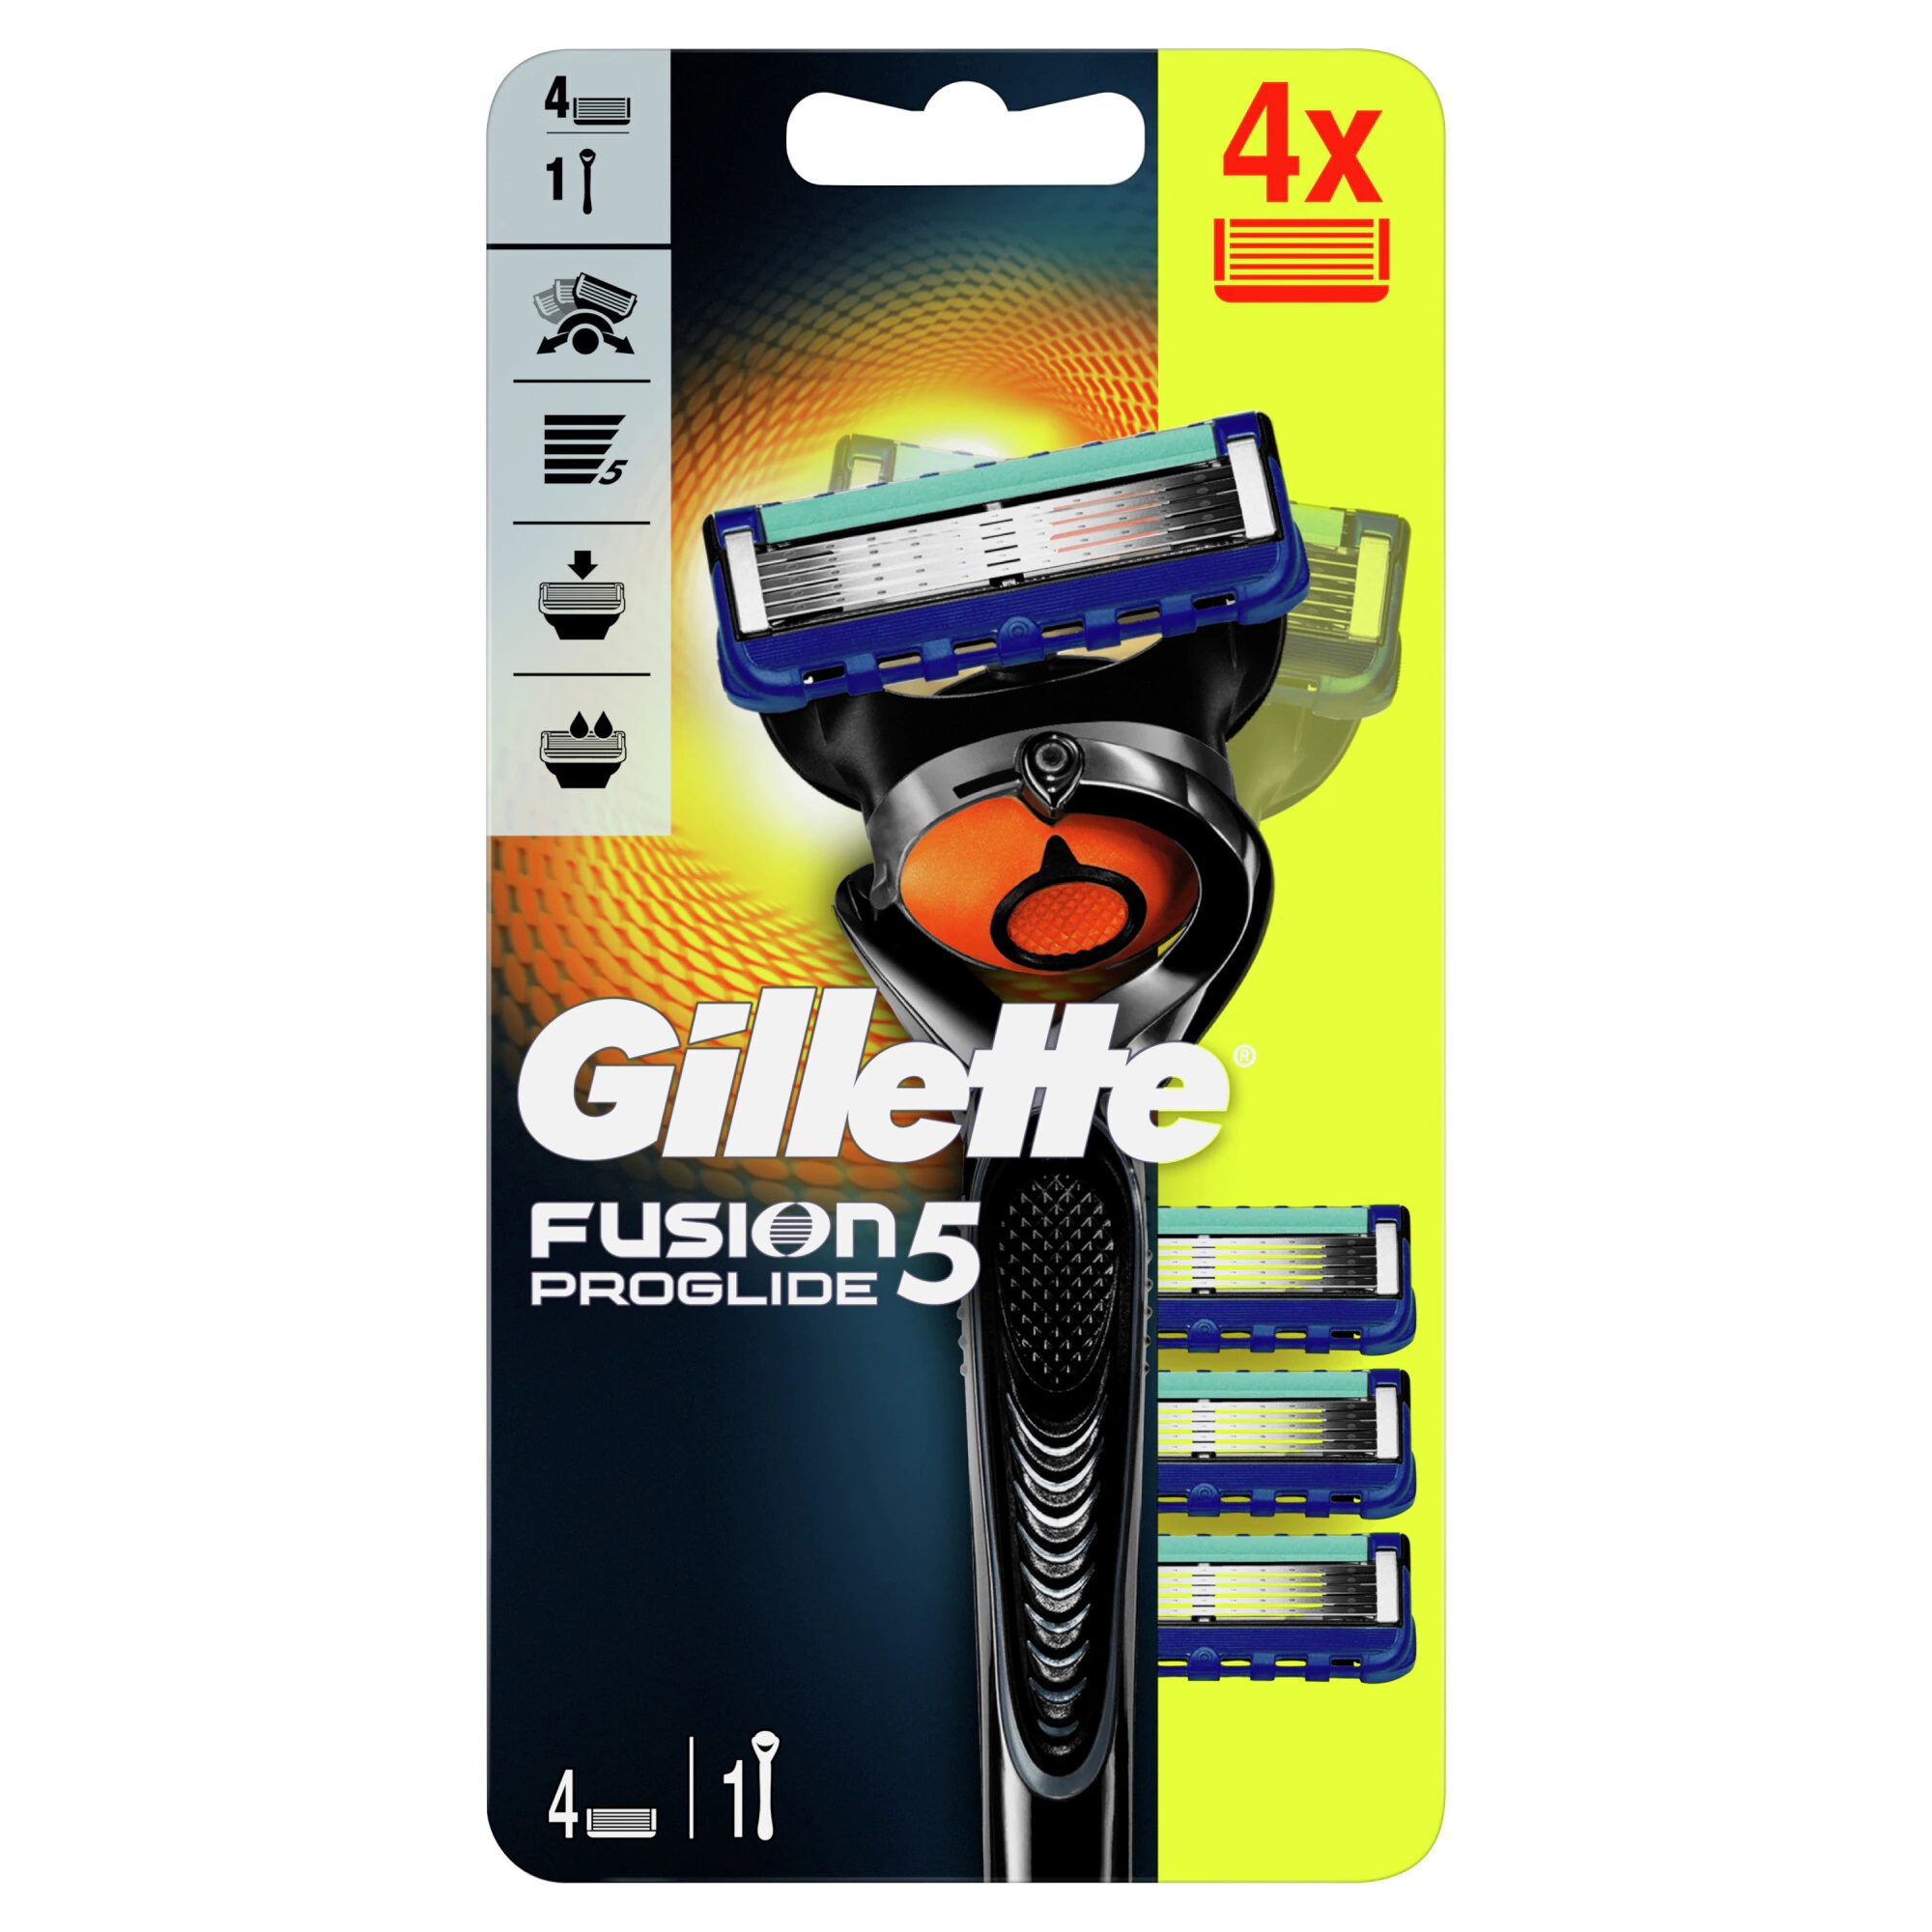 Бритва Gillette Fusion 5 ProGlide, c 4 cменными кассетами - фото 1